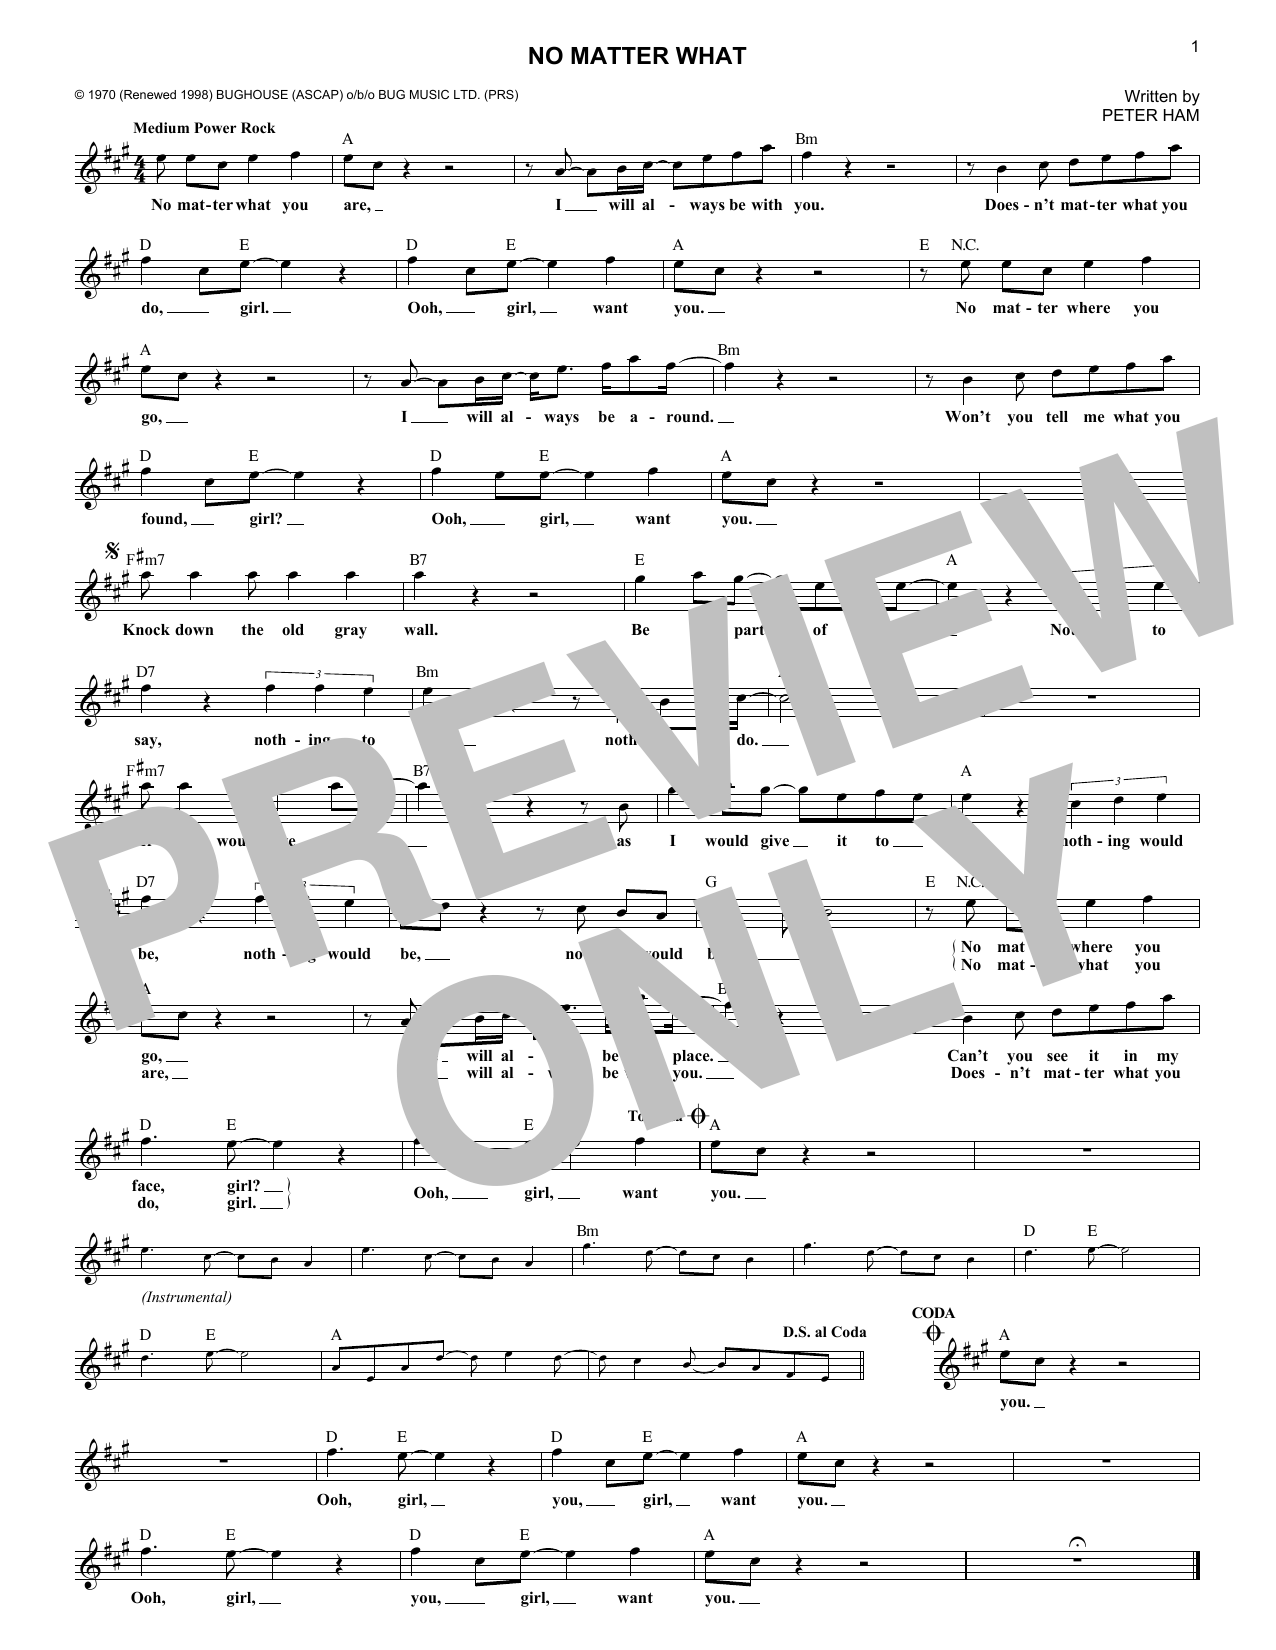 Pete Ham No Matter What Sheet Music Notes & Chords for Melody Line, Lyrics & Chords - Download or Print PDF